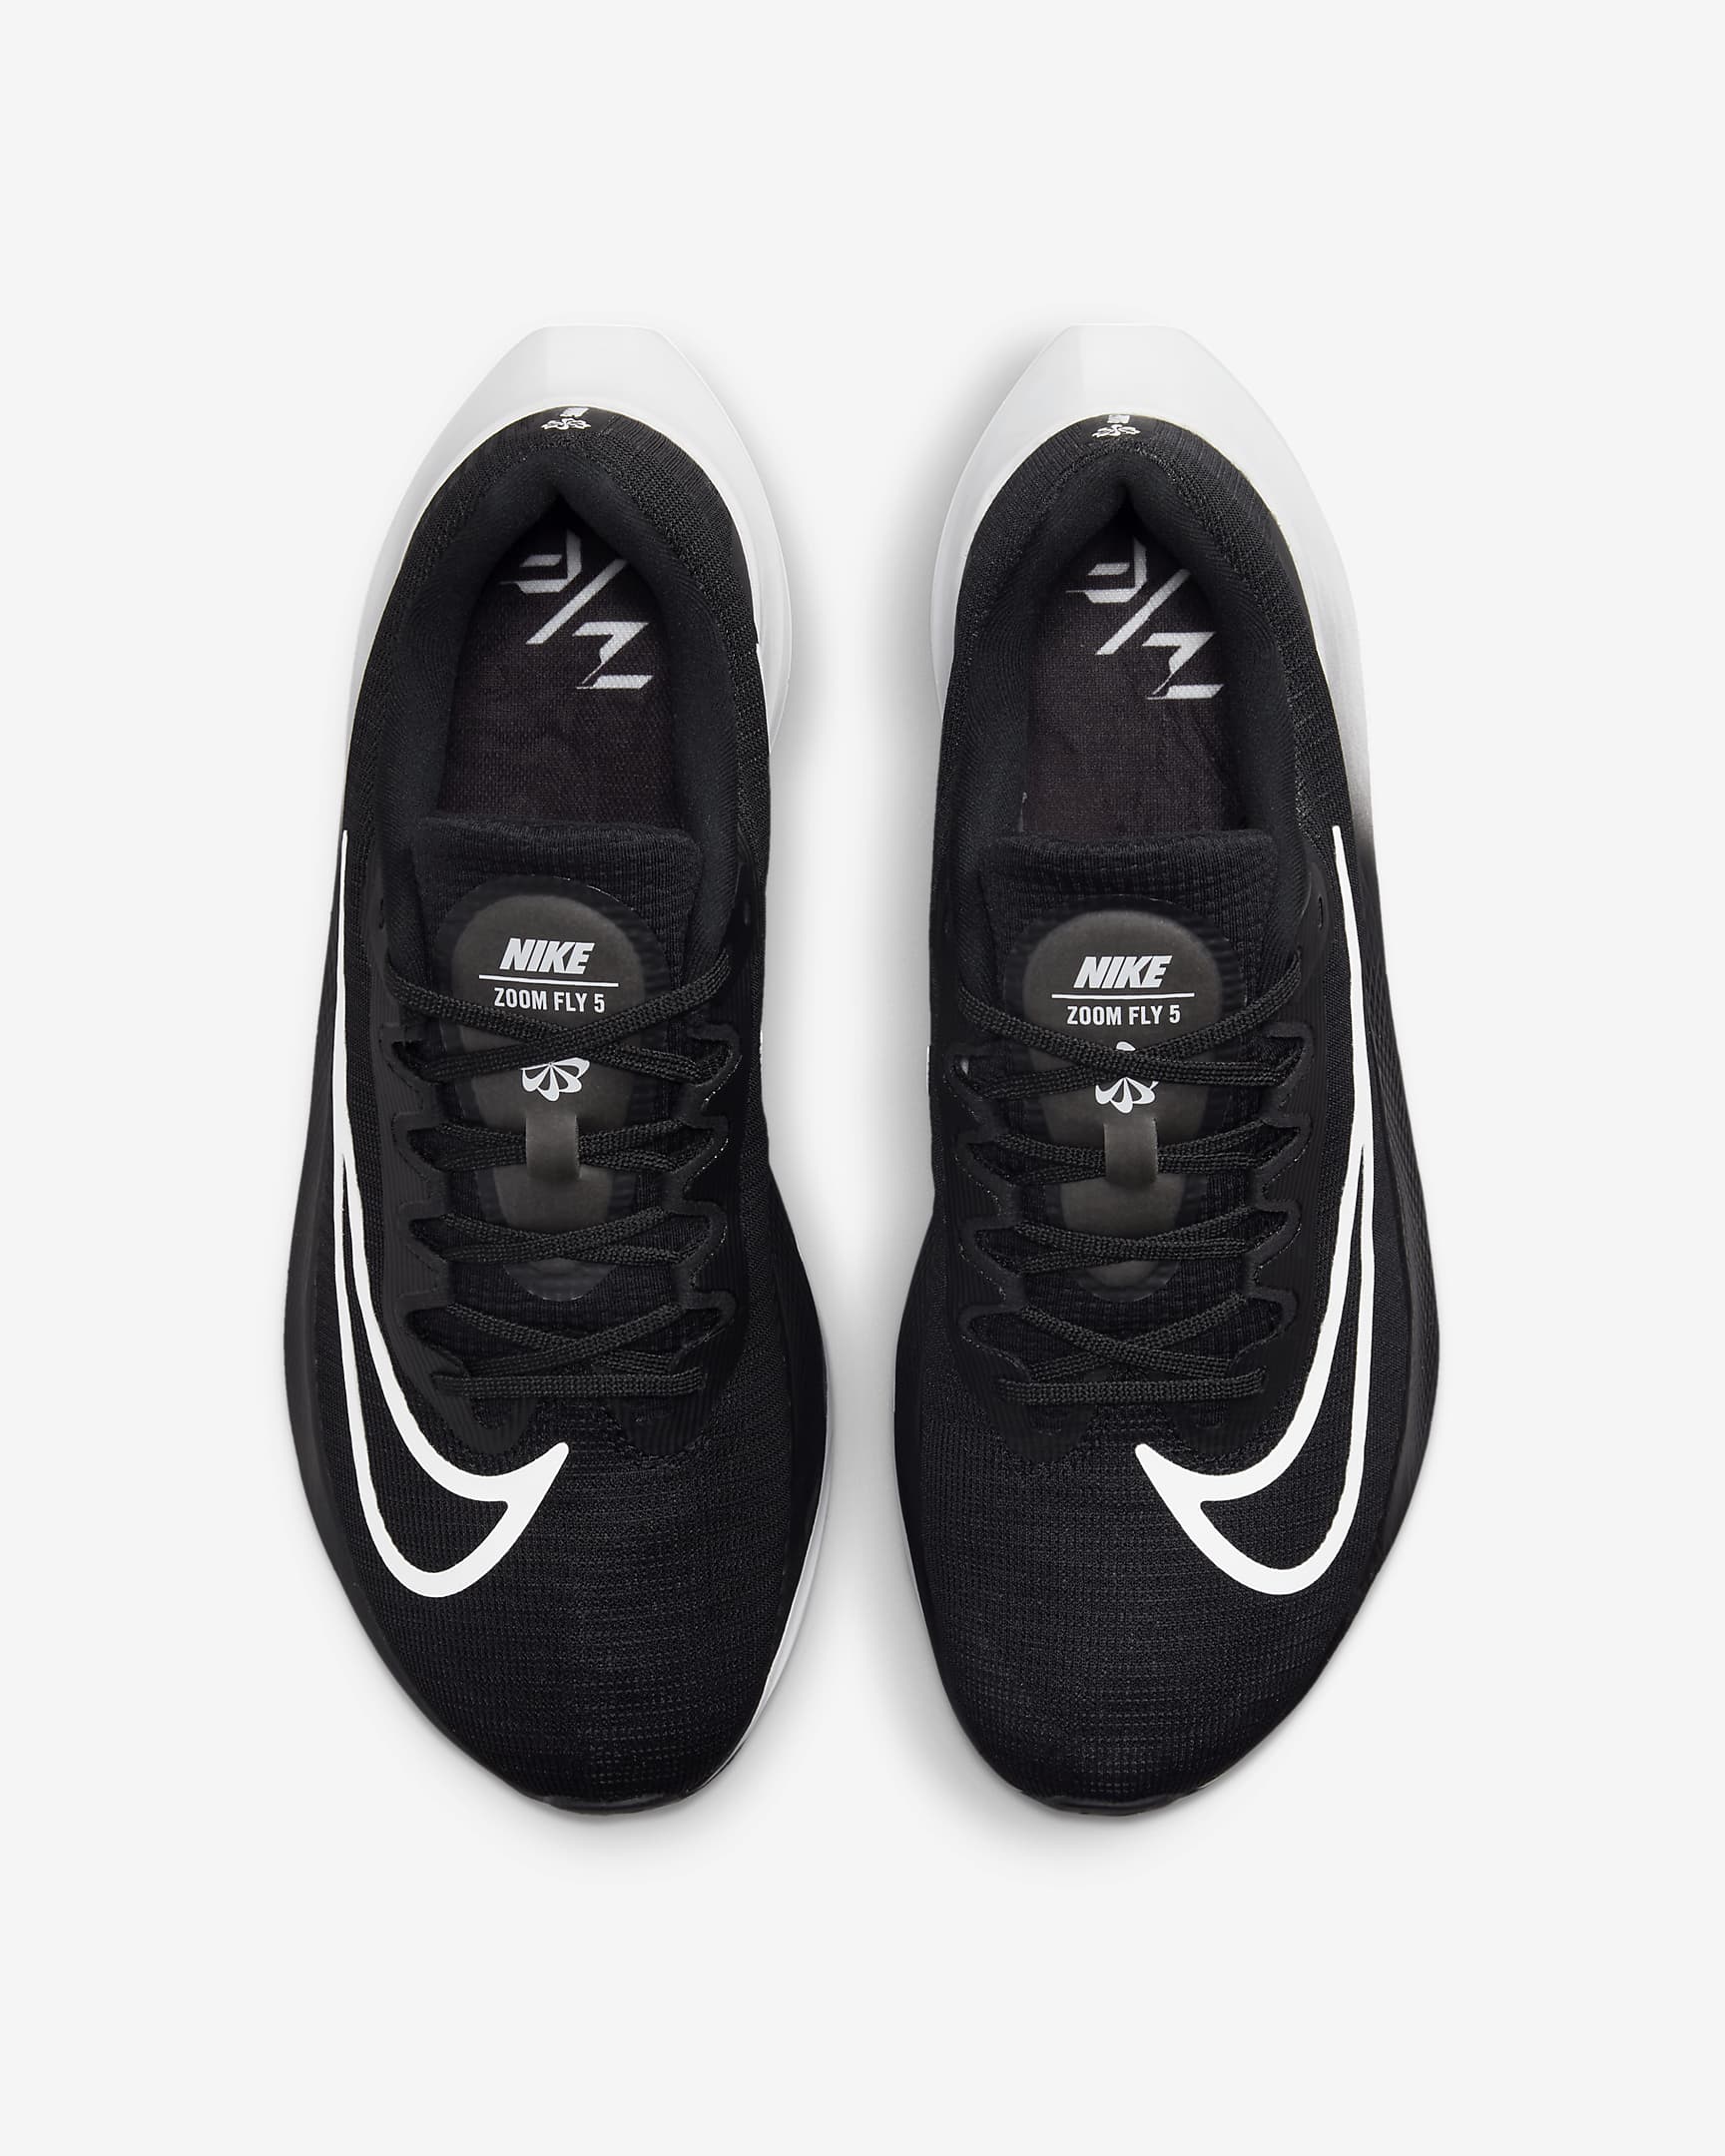 Scarpa da running su strada Nike Zoom Fly 5 – Uomo - Nero/Bianco